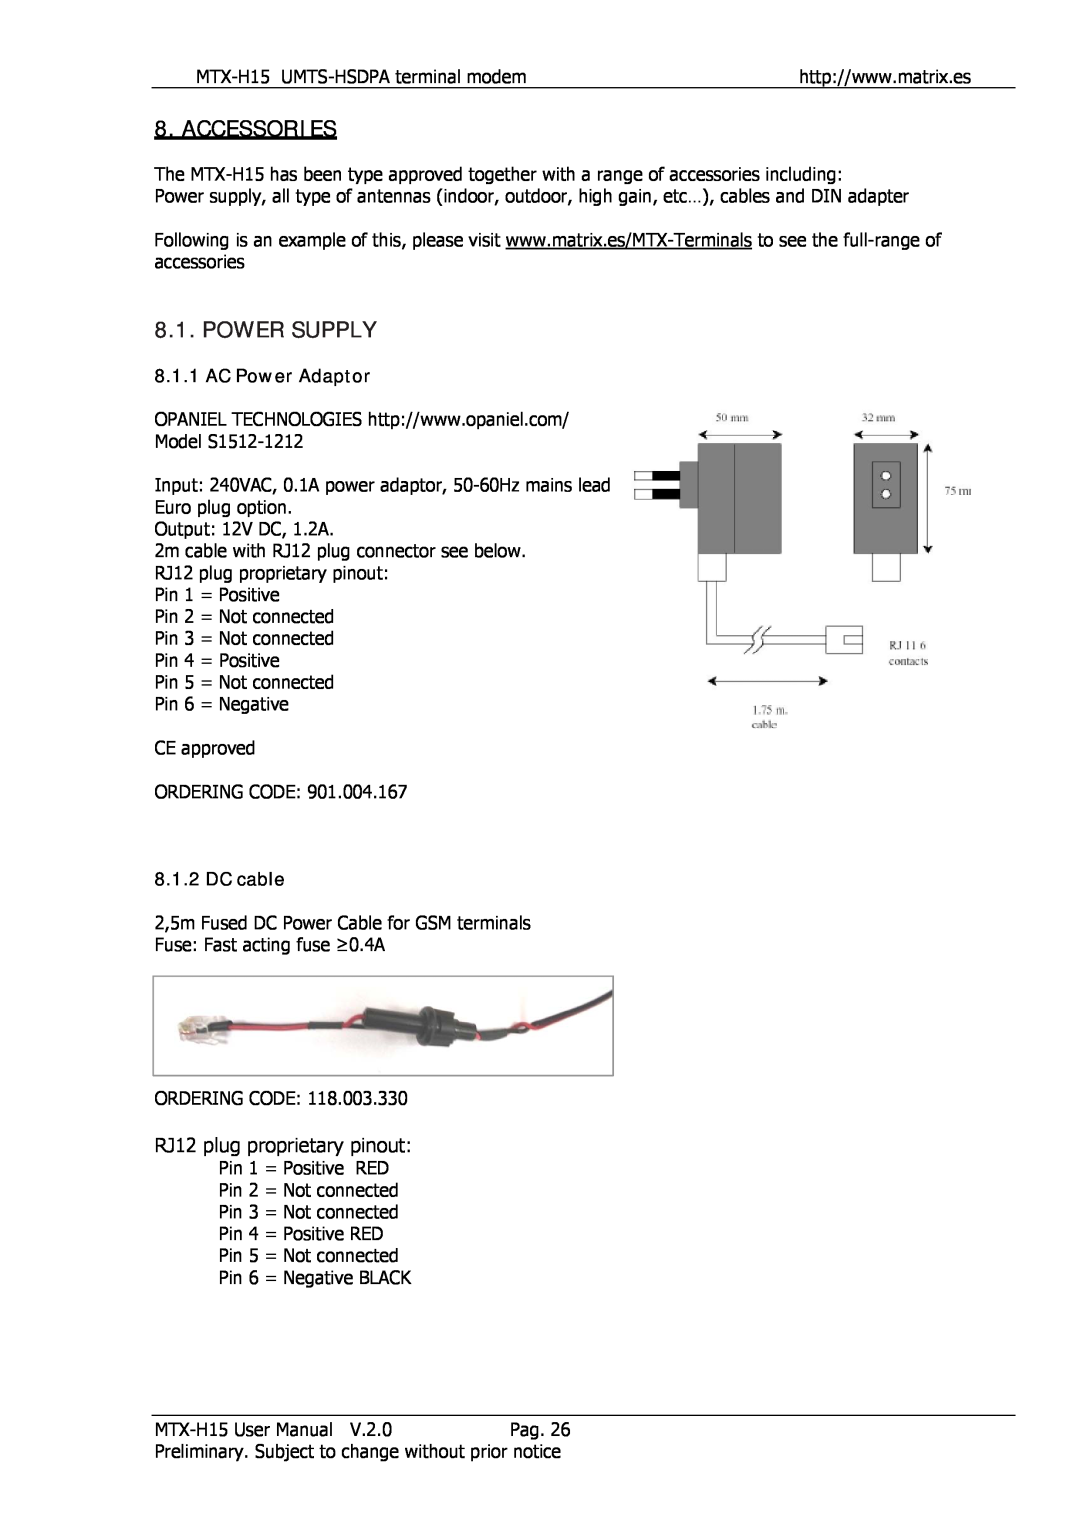 Siemens MTX-H15 user manual Accessories, RJ12 plug proprietary pinout, AC Power Adaptor, DC cable, Power Supply 